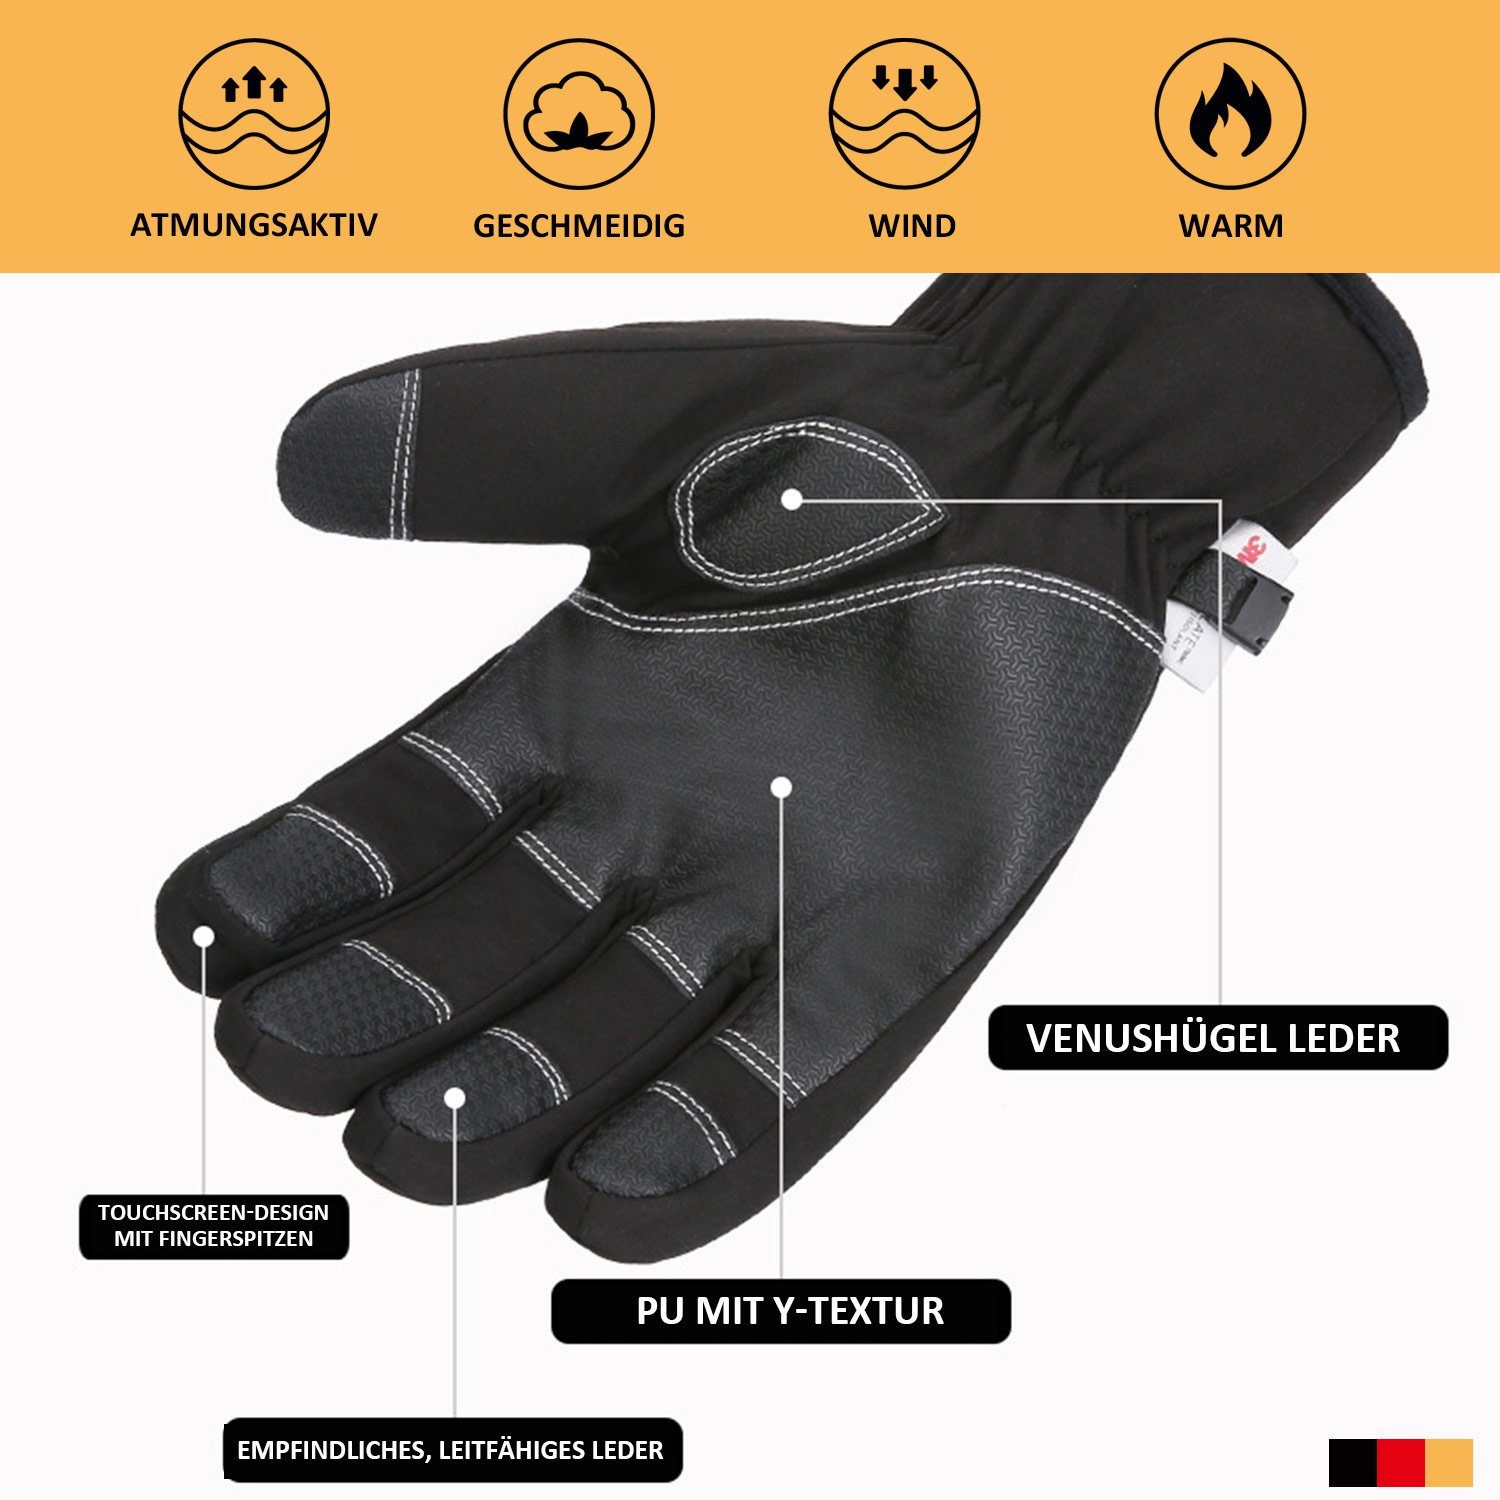 Warme Handschuhe Touchscreen MAGICSHE Winter Winddichte Schwarz Skihandschuhe